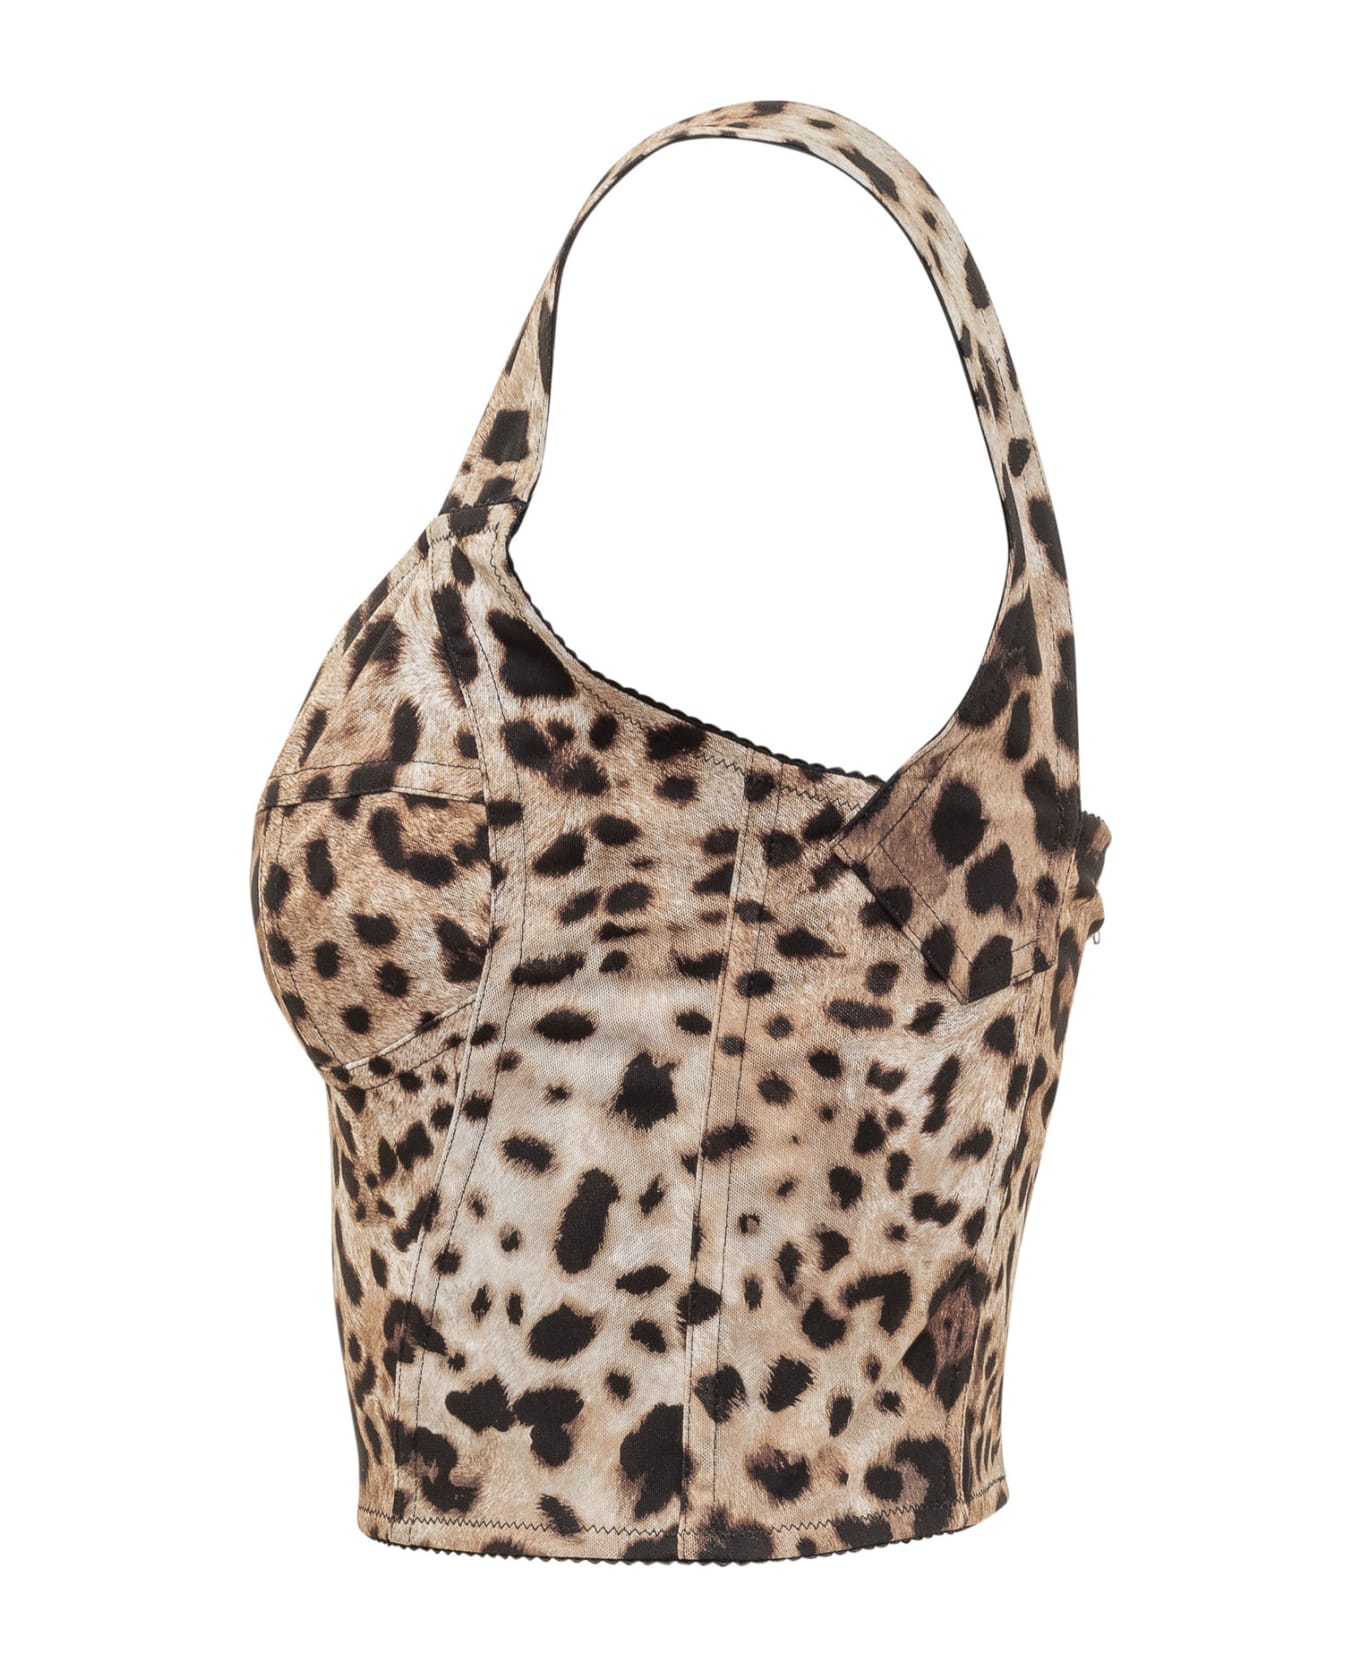 Dolce & Gabbana Leopard Print Bustier - LEO NEW